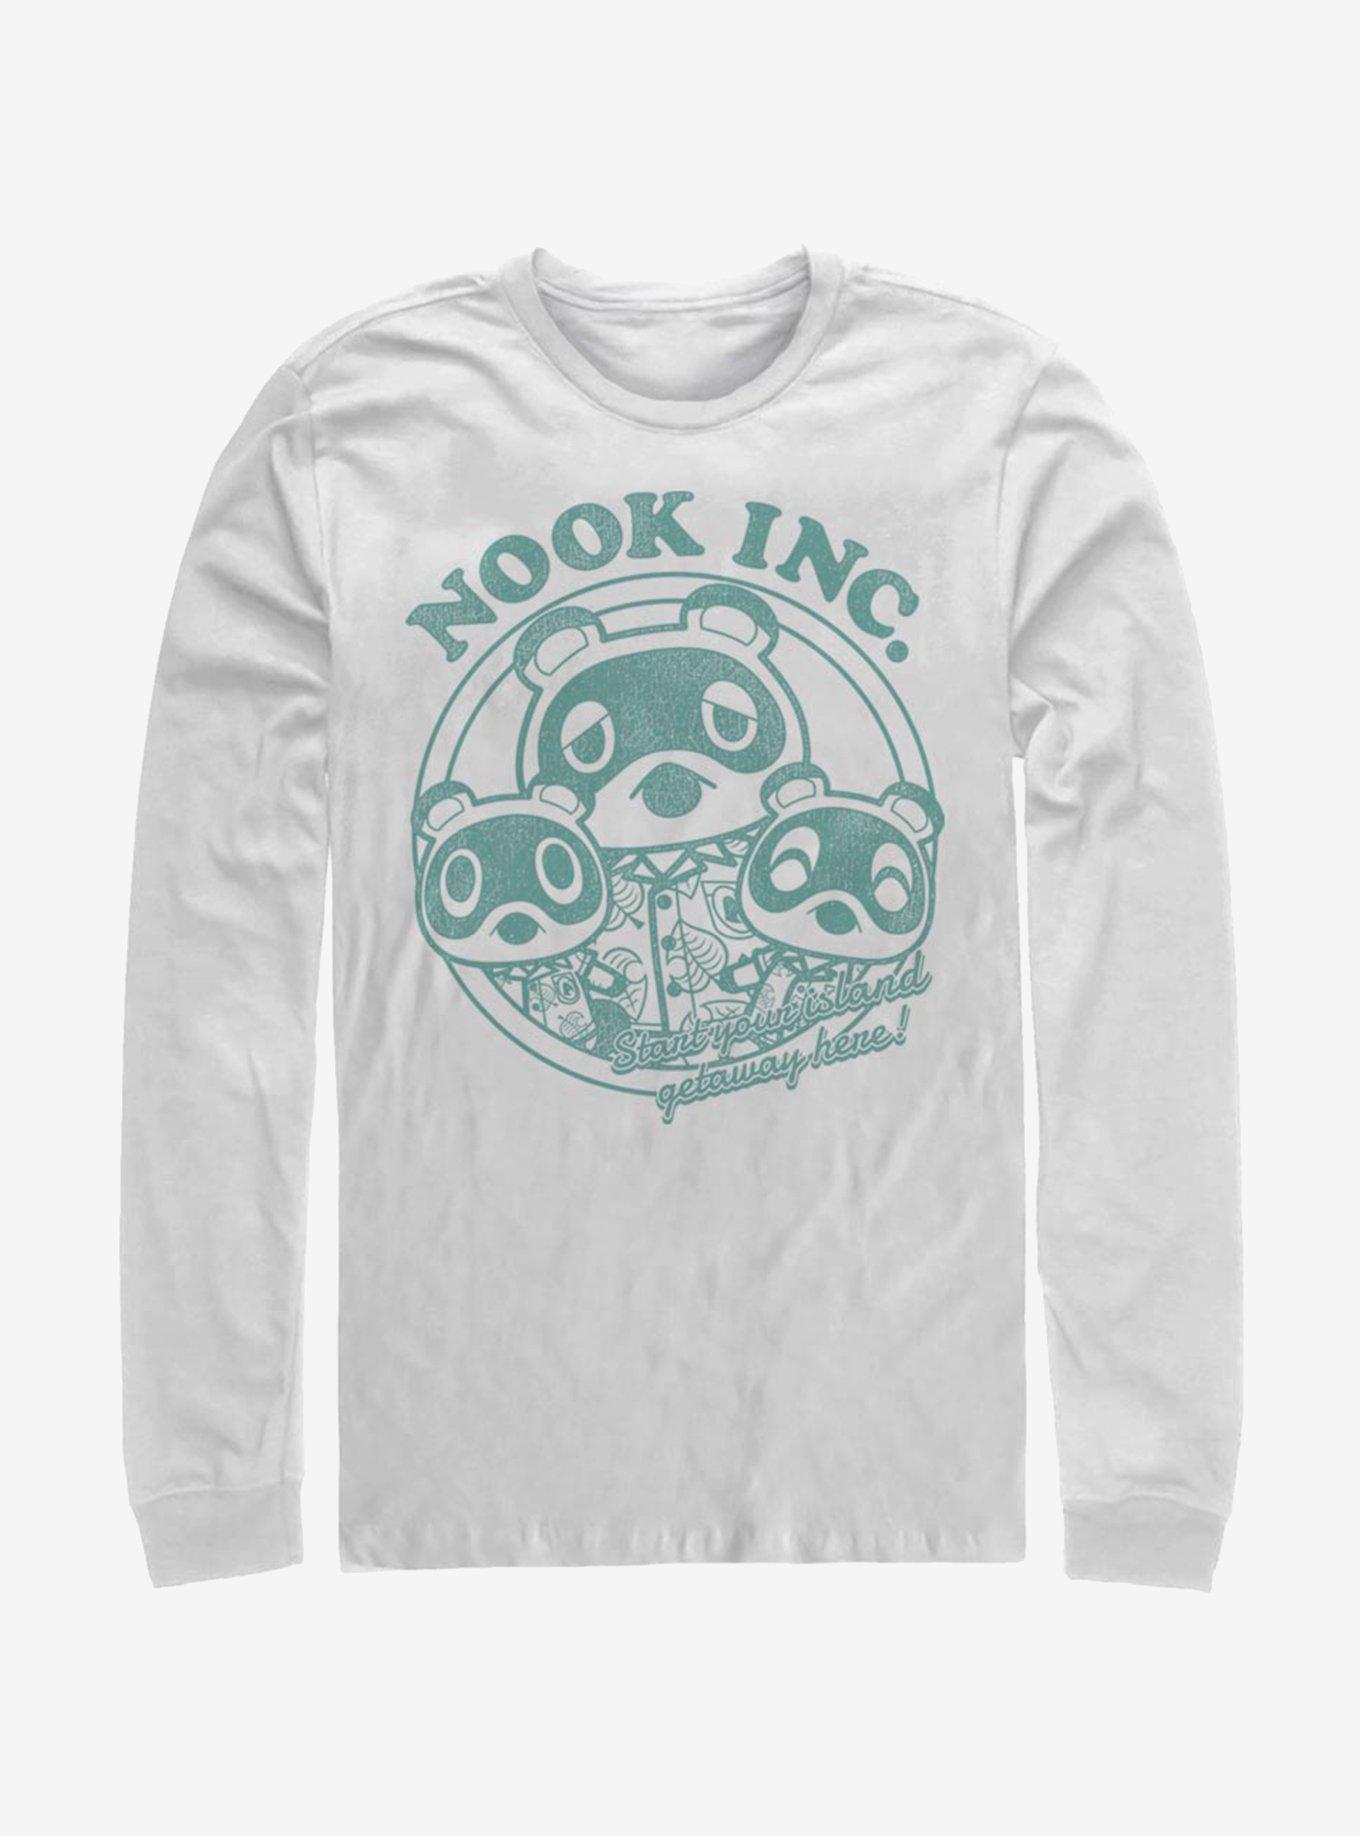 Animal Crossing Nook Inc. Getaway Long-Sleeve T-Shirt, WHITE, hi-res